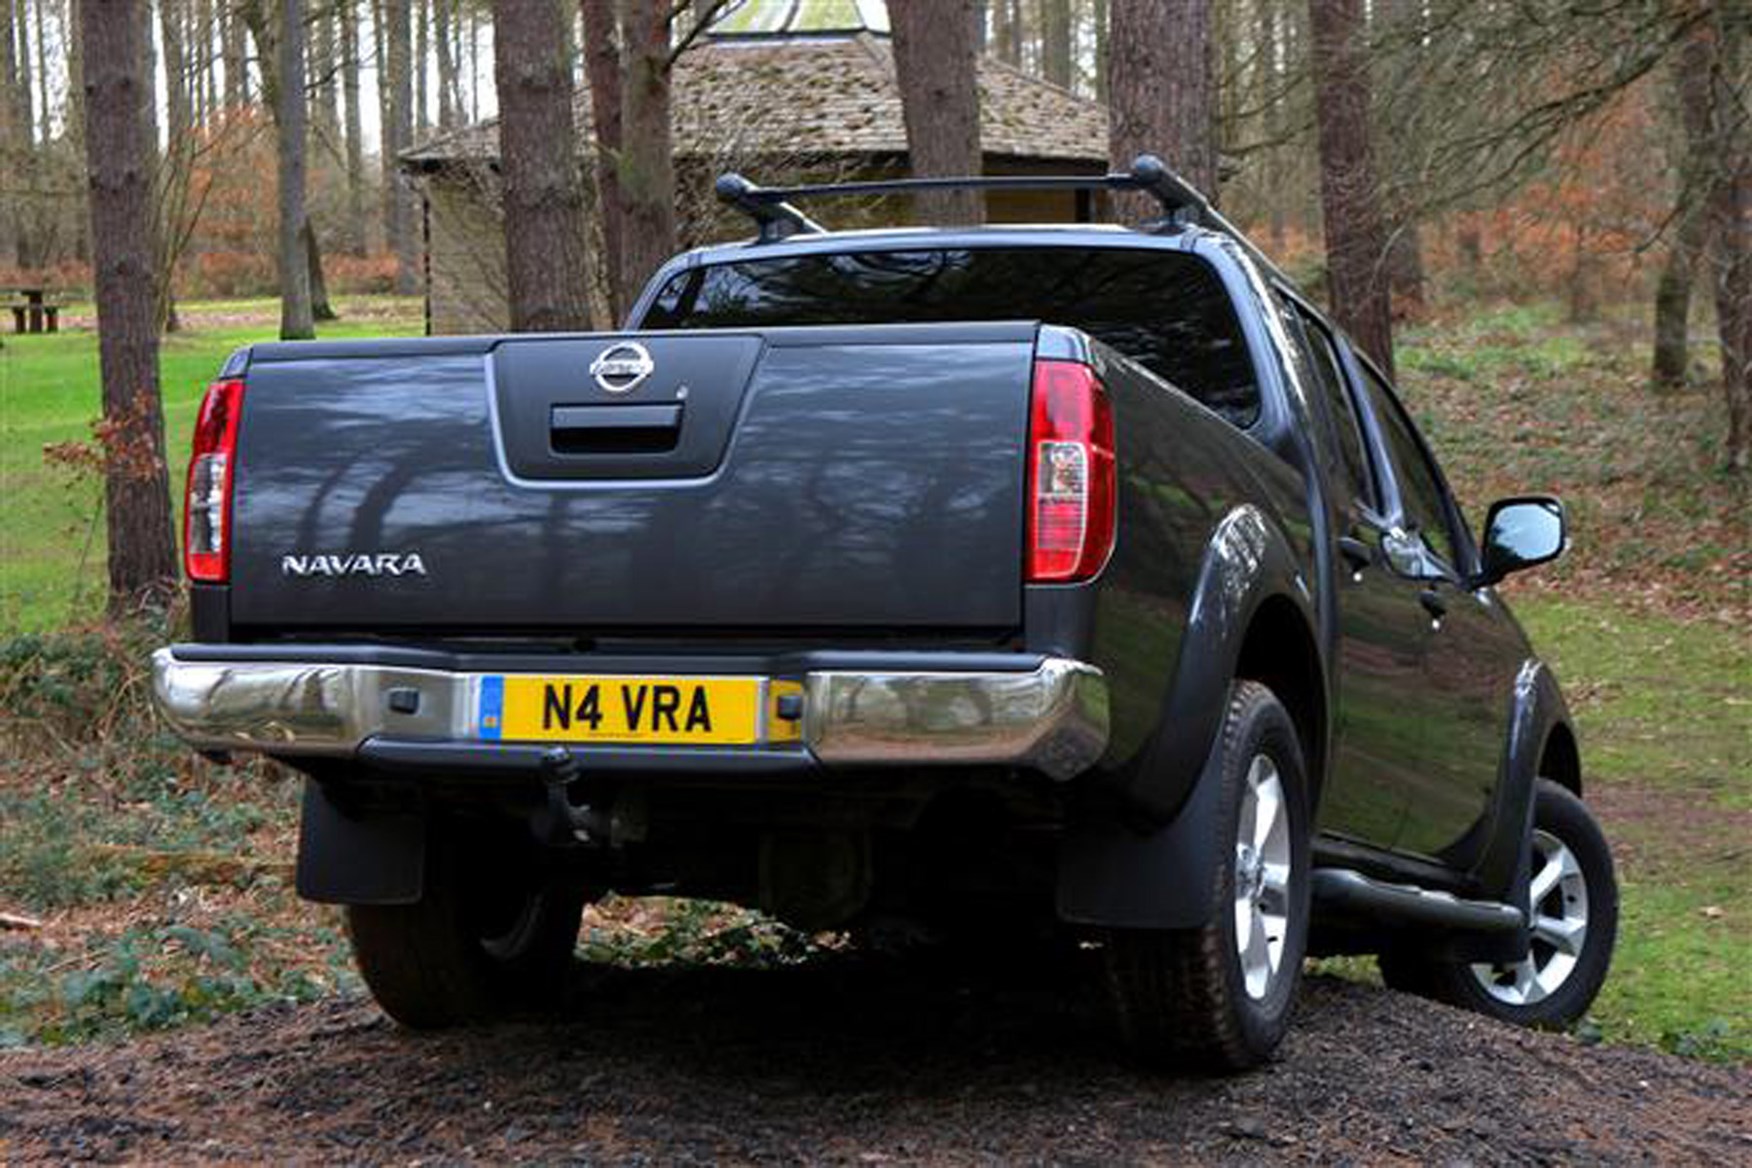 Nissan Navara 2005-2015 review on Parkers Vans - rear exterior